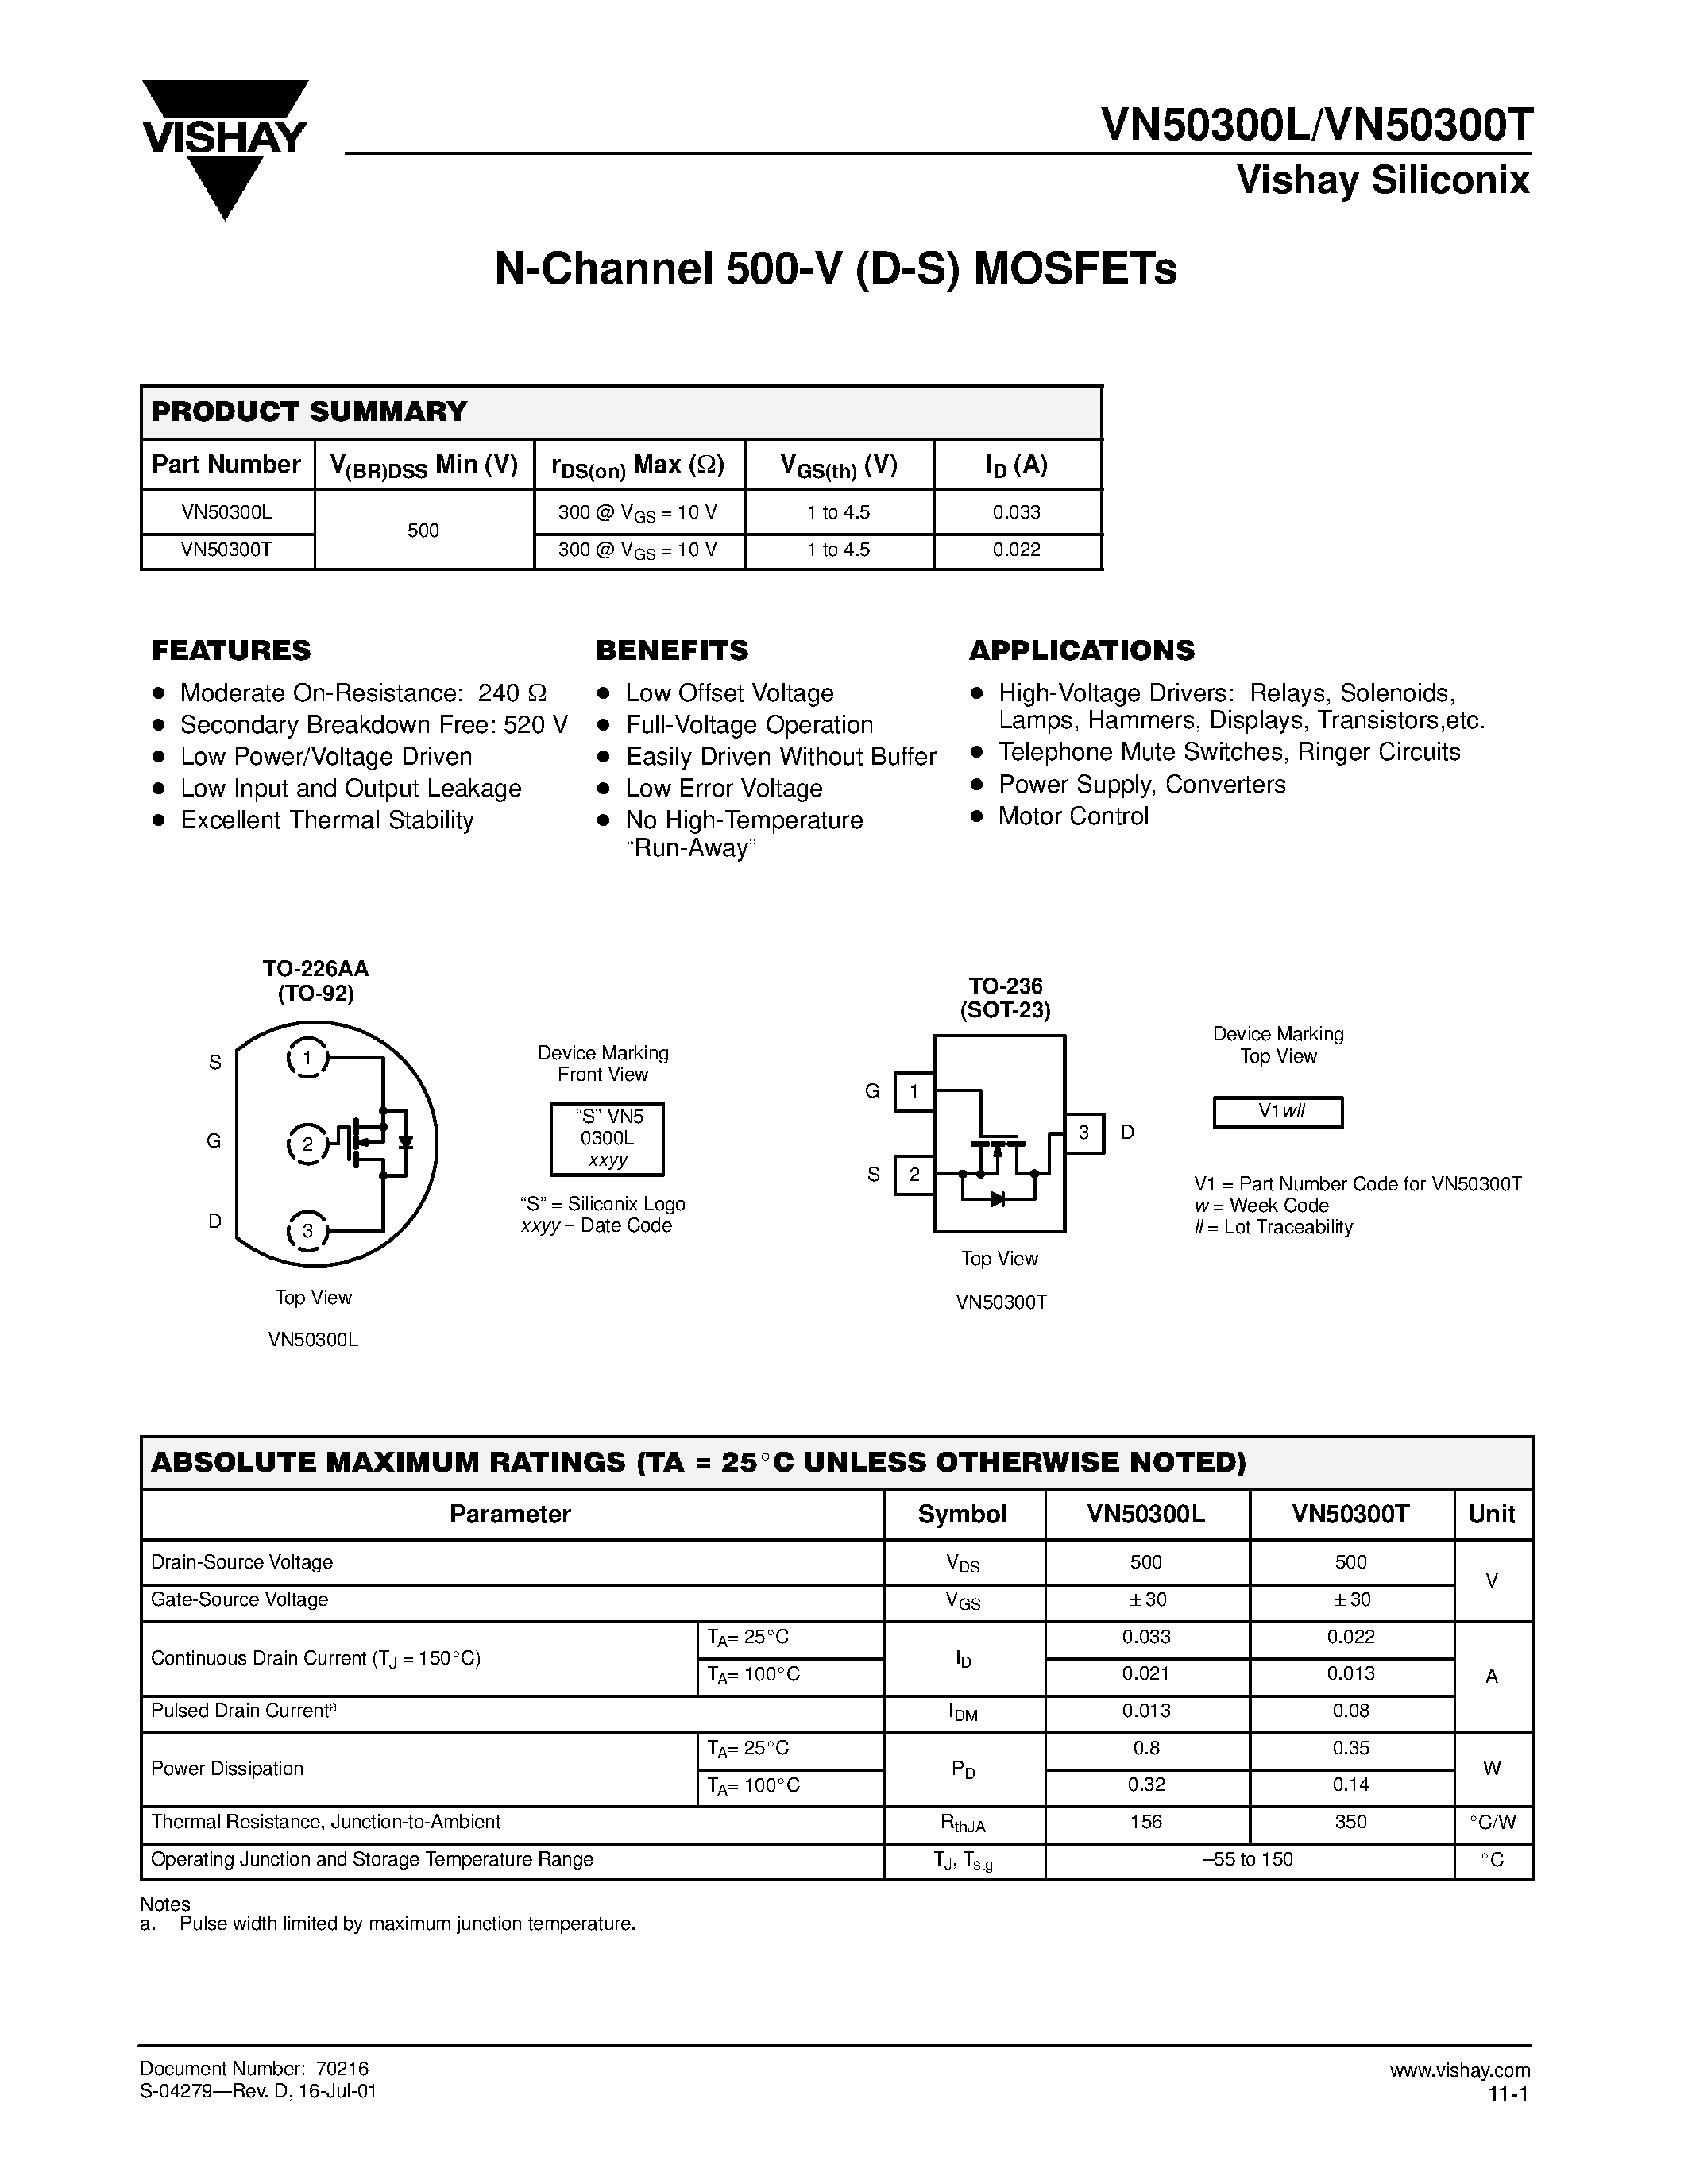 Даташит VN50300T - N-Channel 500-V (D-S) MOSFETs страница 1